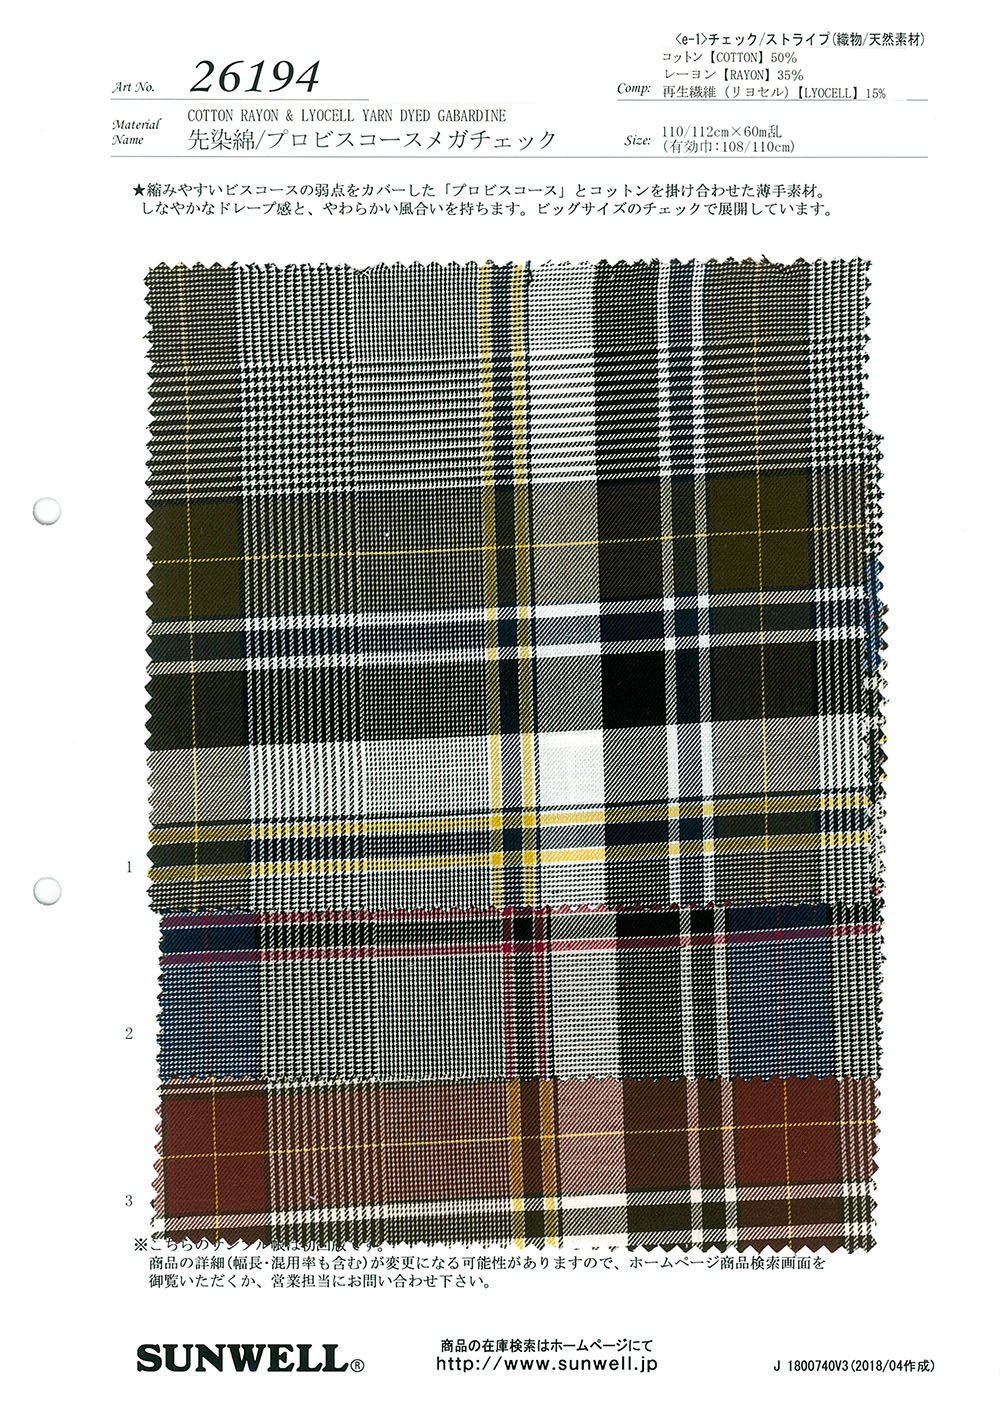 26194 Garngefärbtes 60 Single Thread Cotton/Cellulose Glencheck[Textilgewebe] SUNWELL